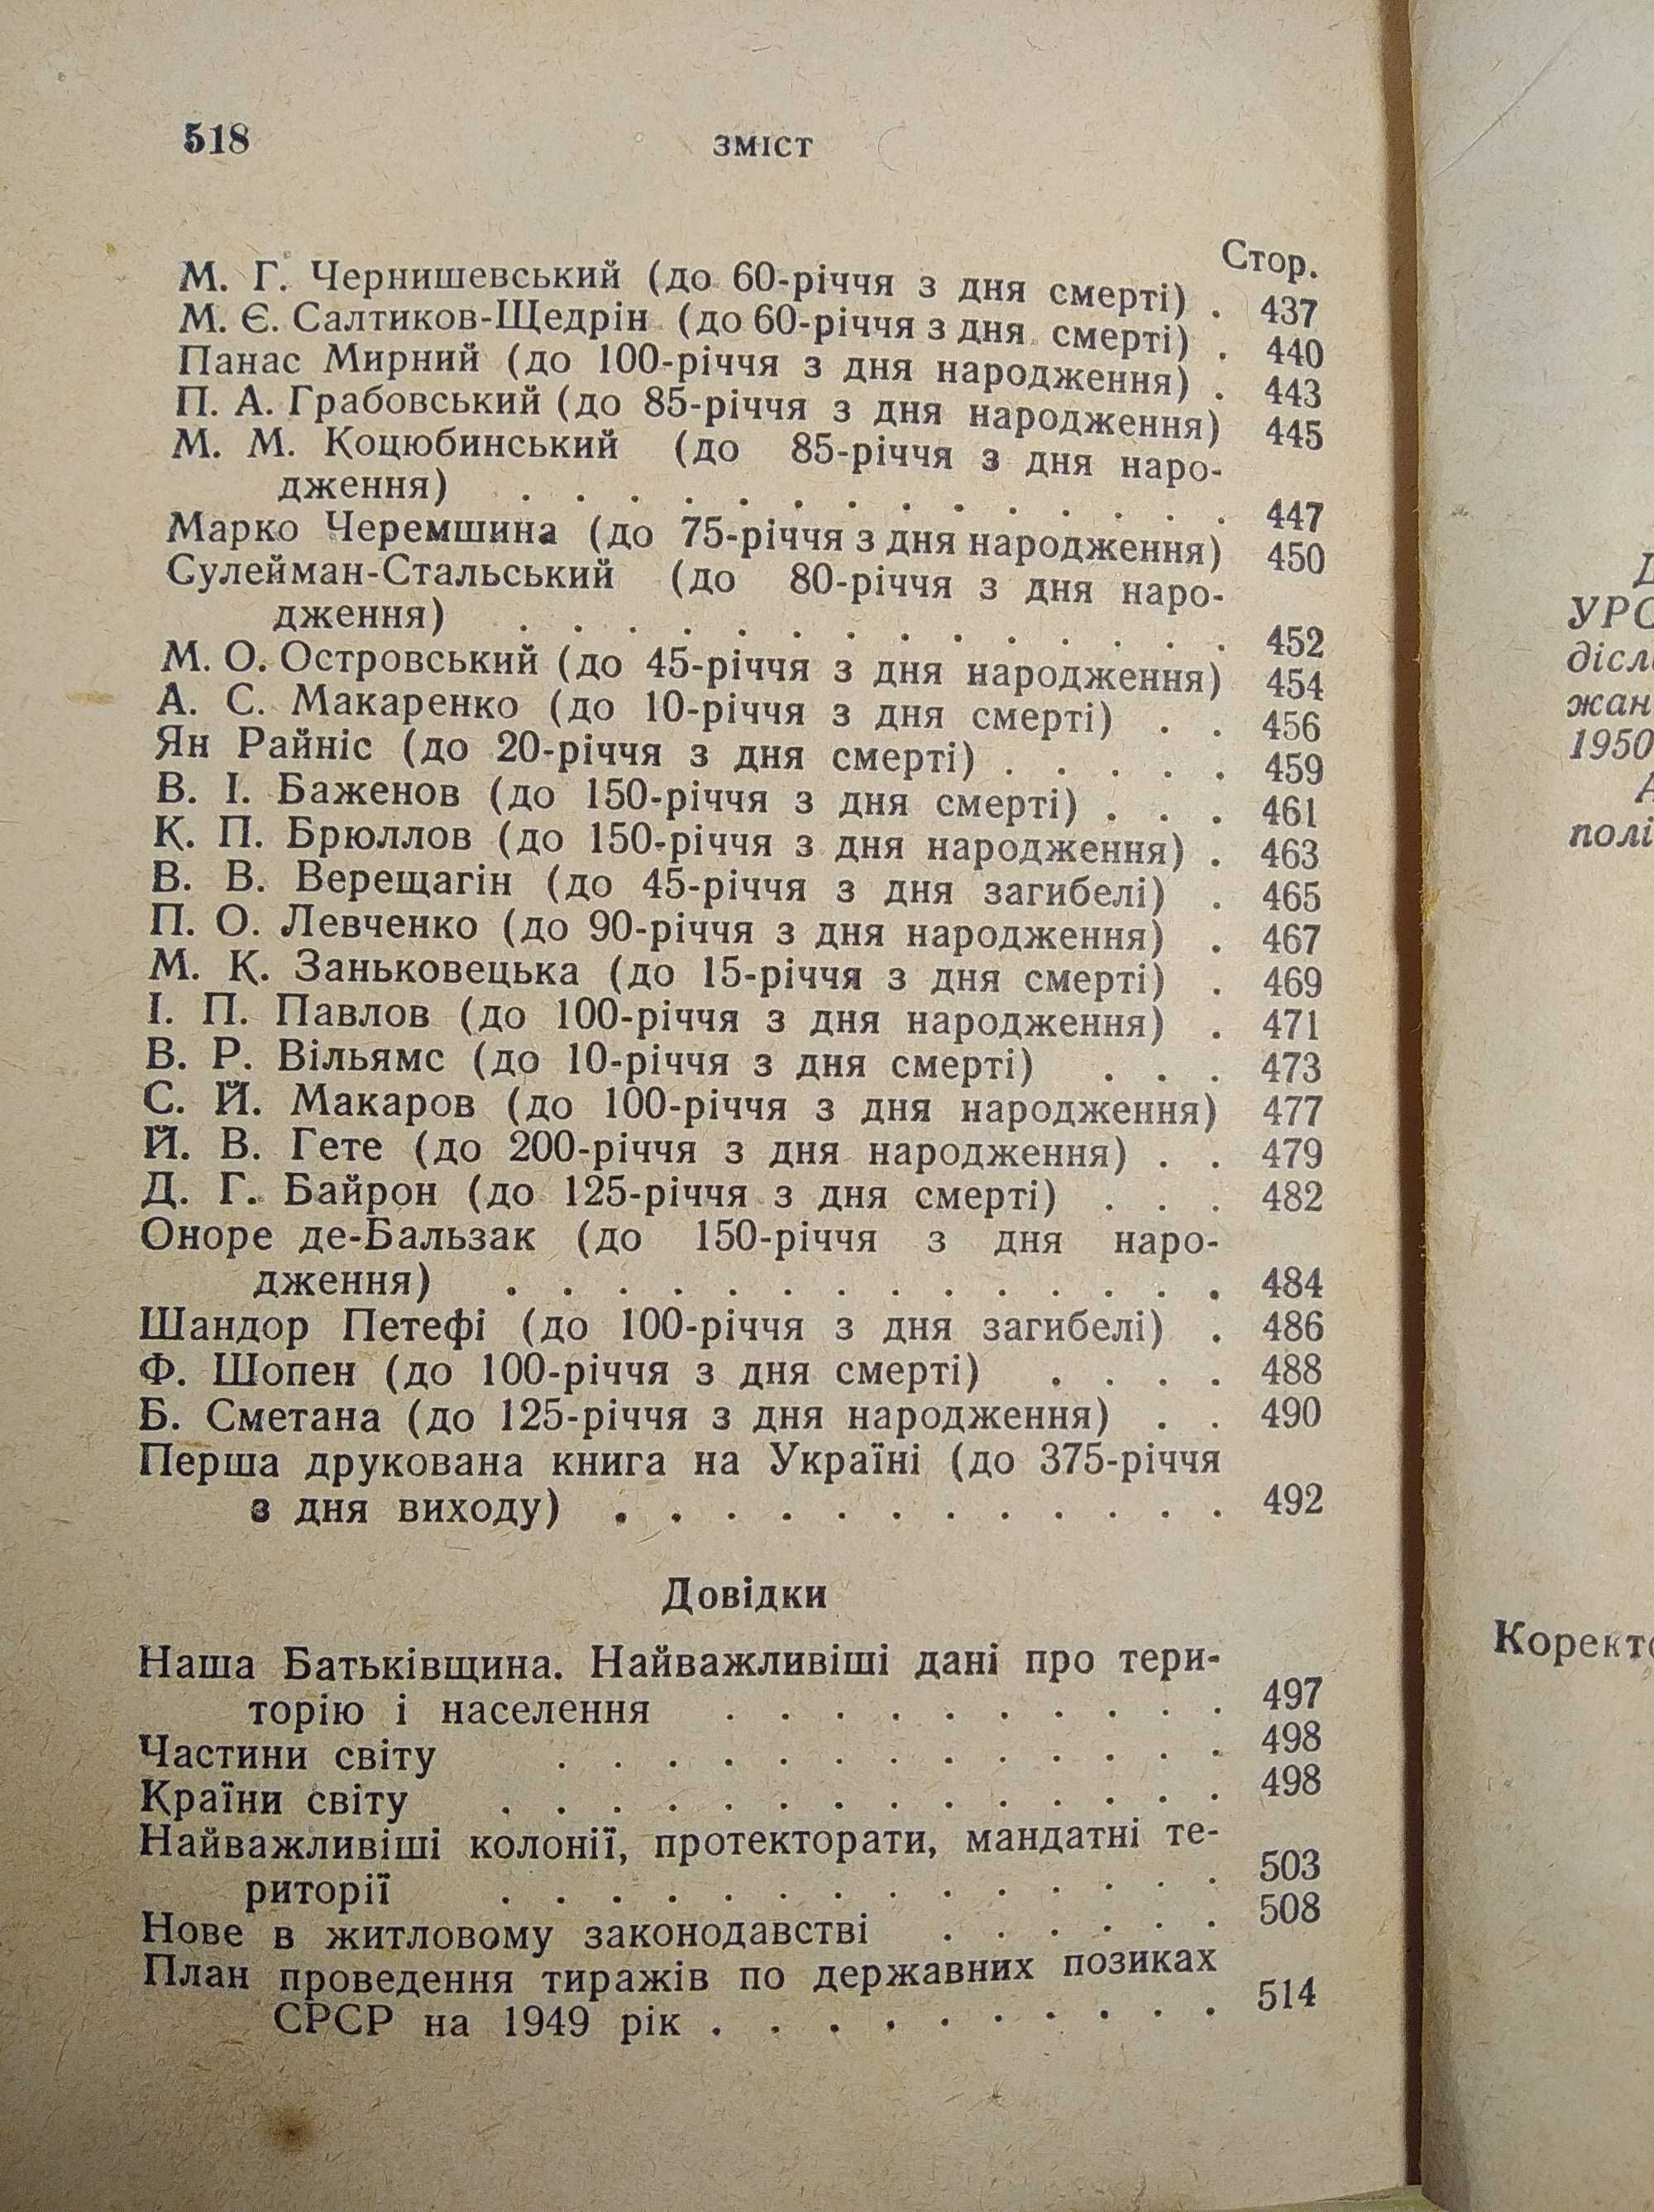 Справочник ежегодник 1949 год  (на украинском языке)